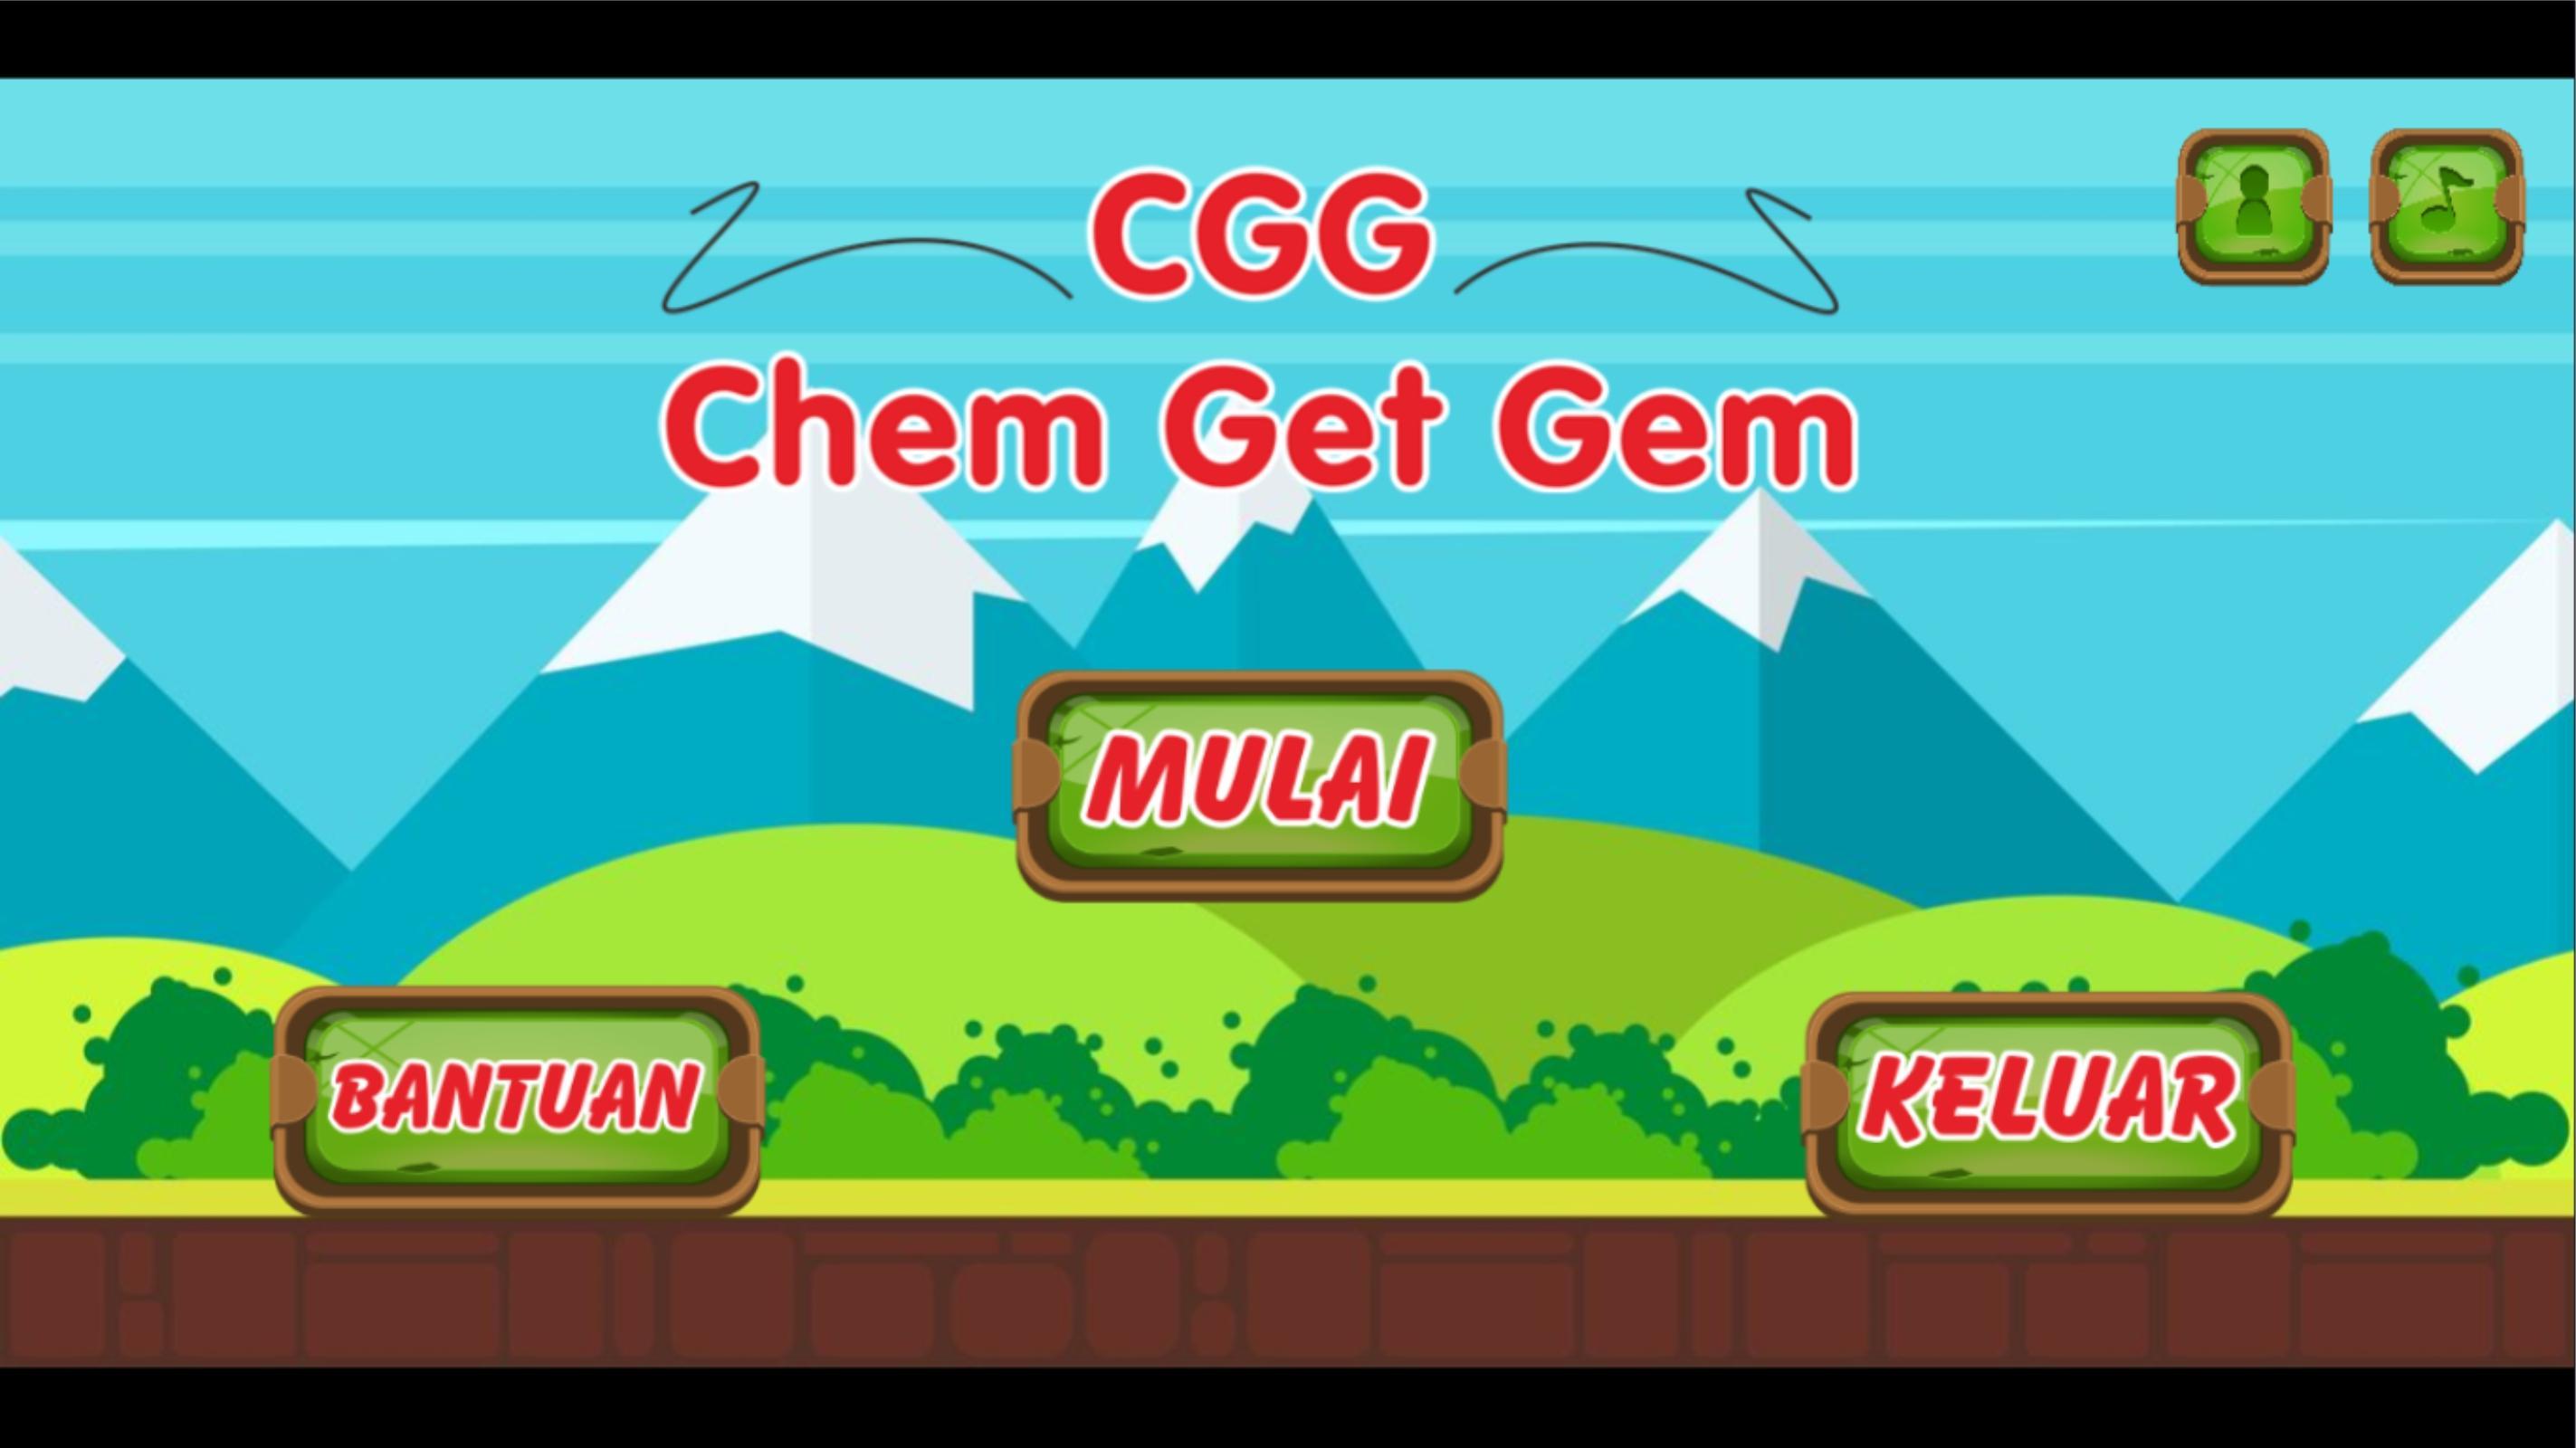 Get gems. Chem game.